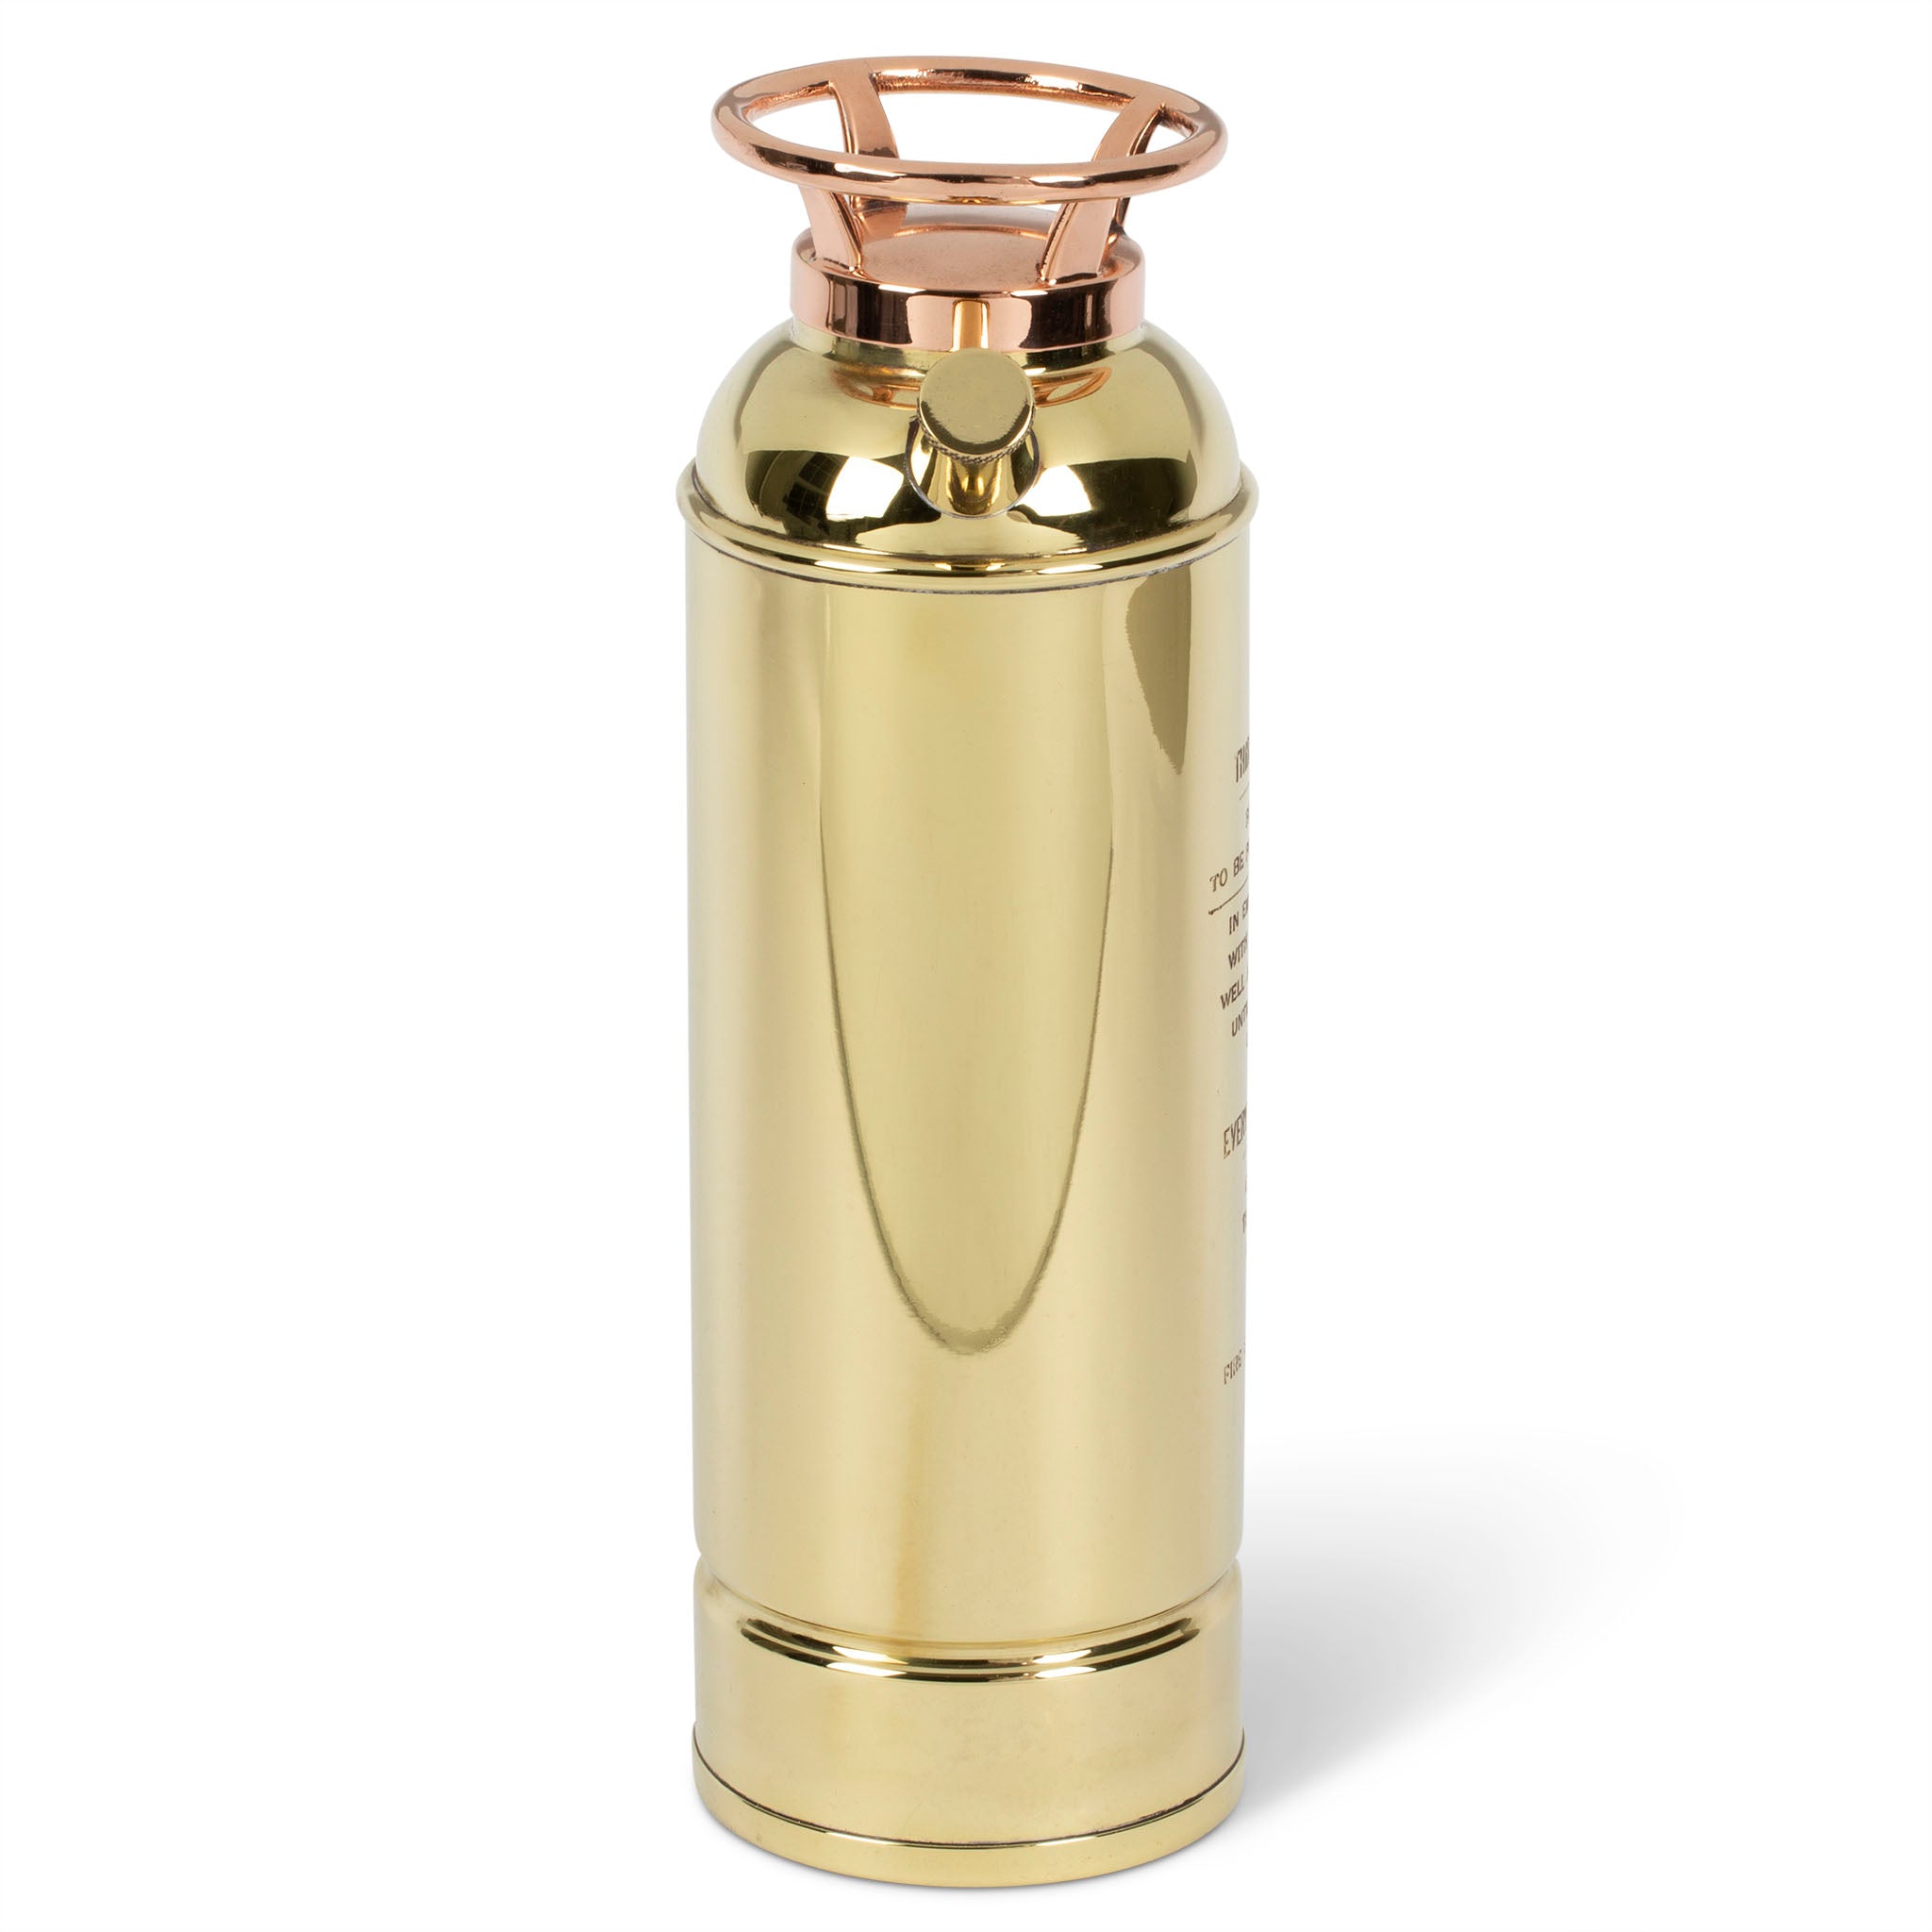 Vintage Brass & Copper Thirst Extinguisher Cocktail Shaker